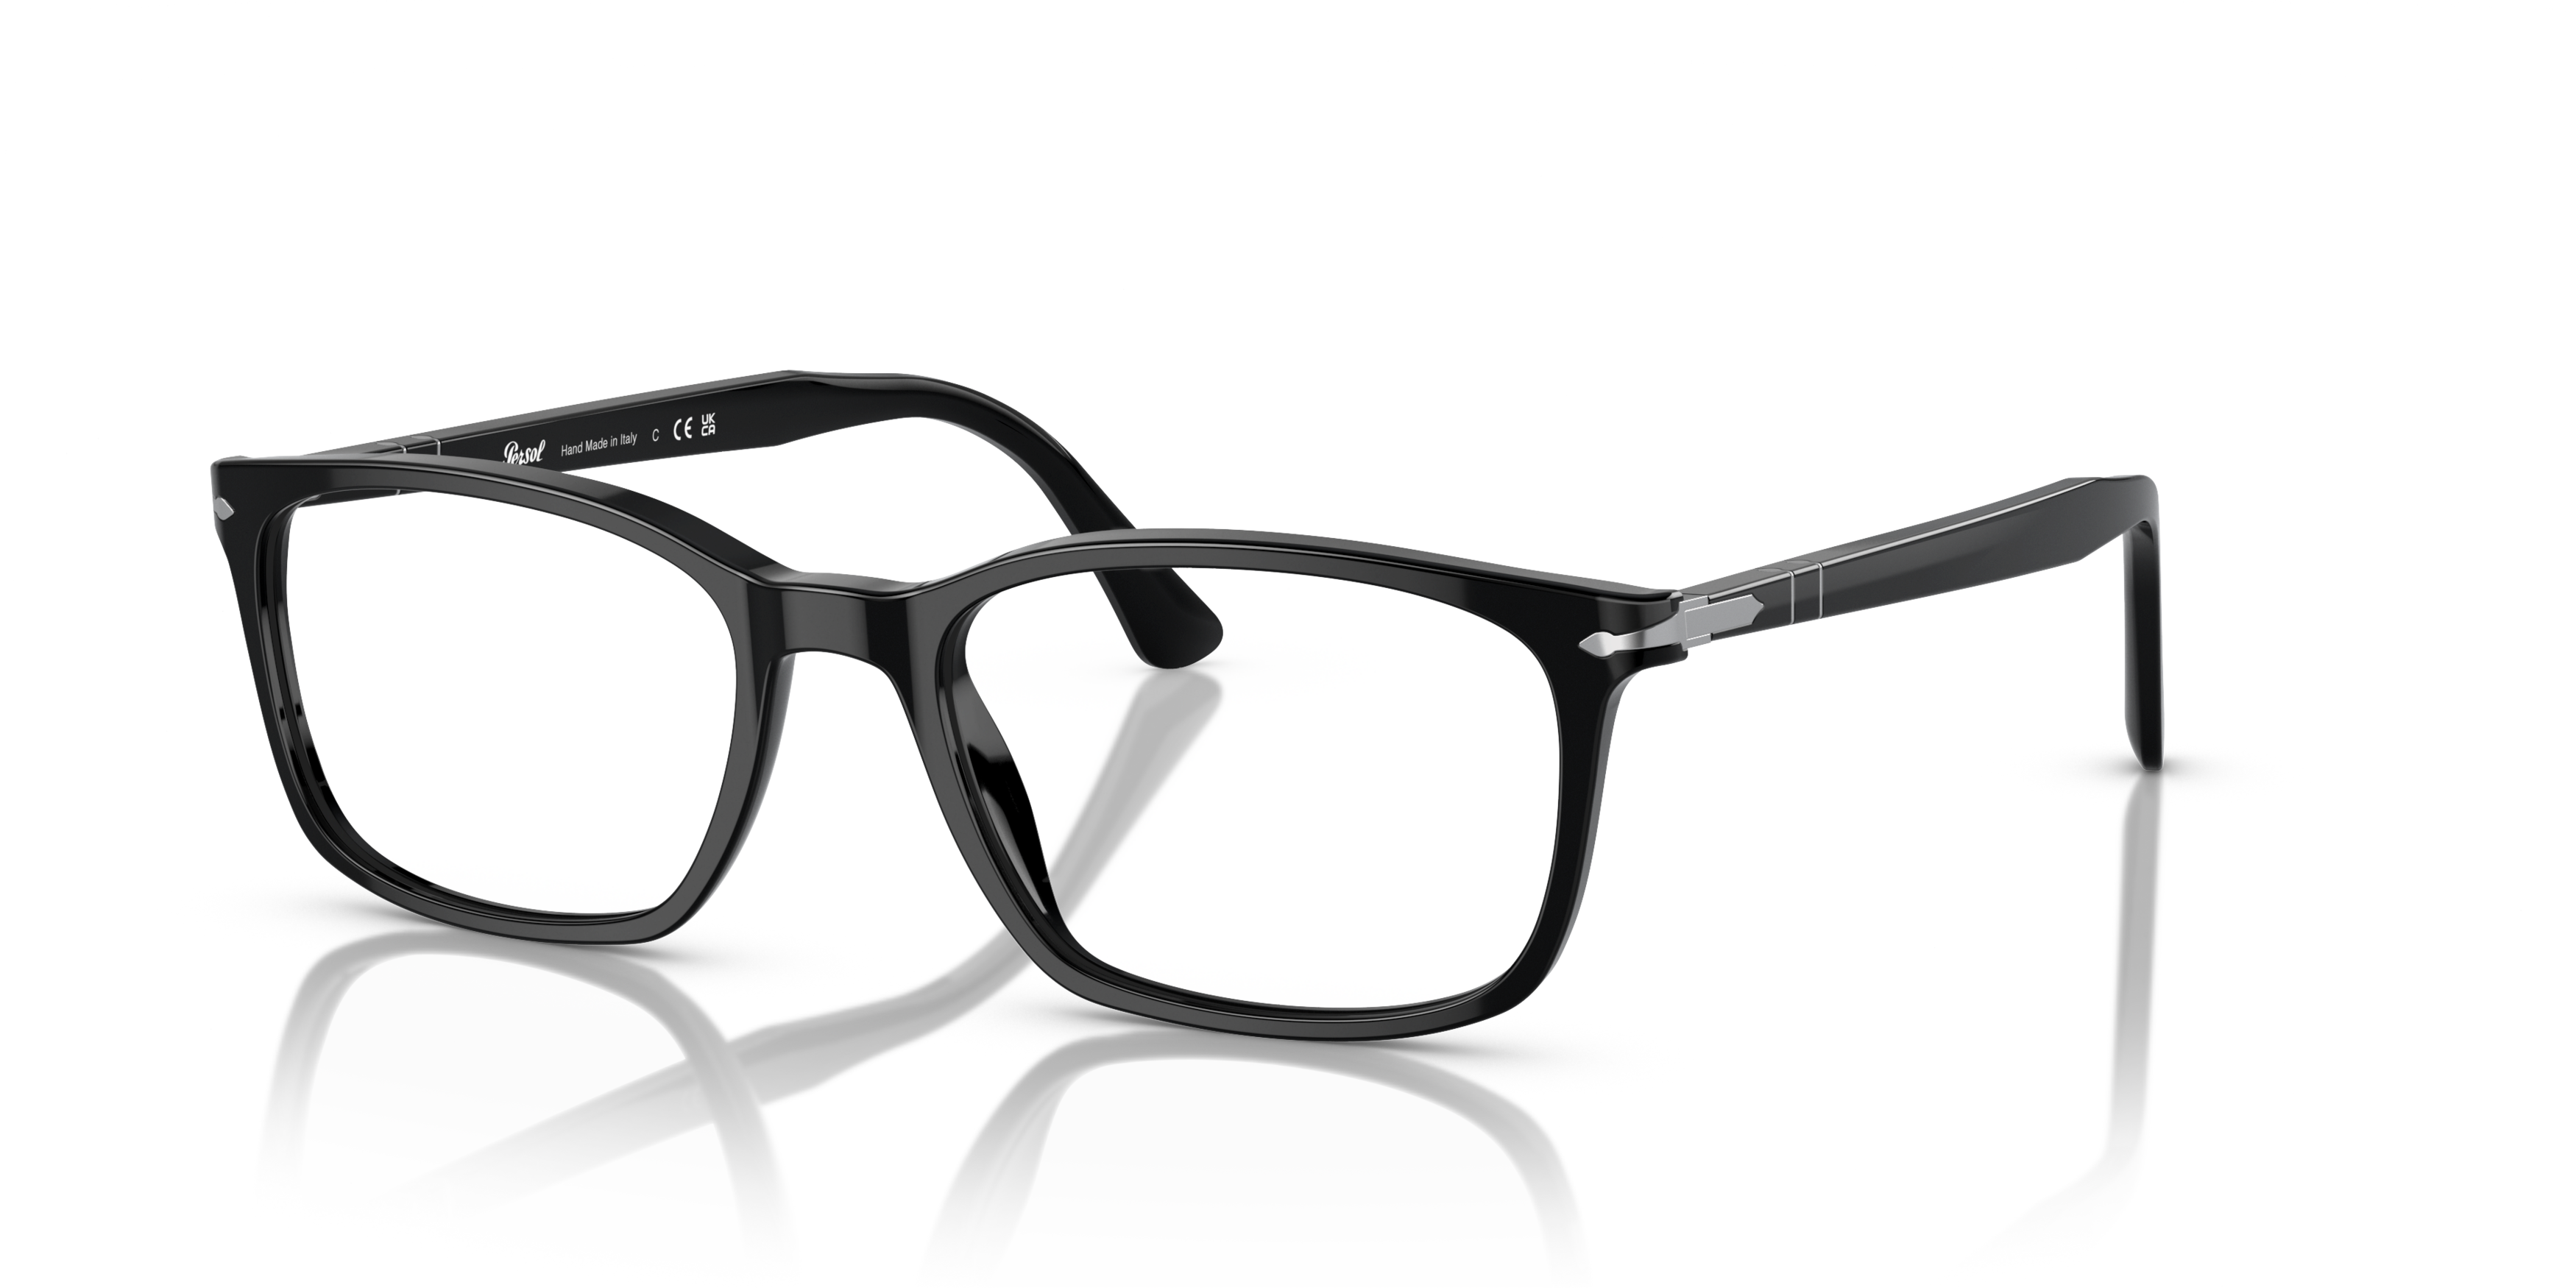 Angle_Left01 Persol PO 3189V Glasses Transparent / Black